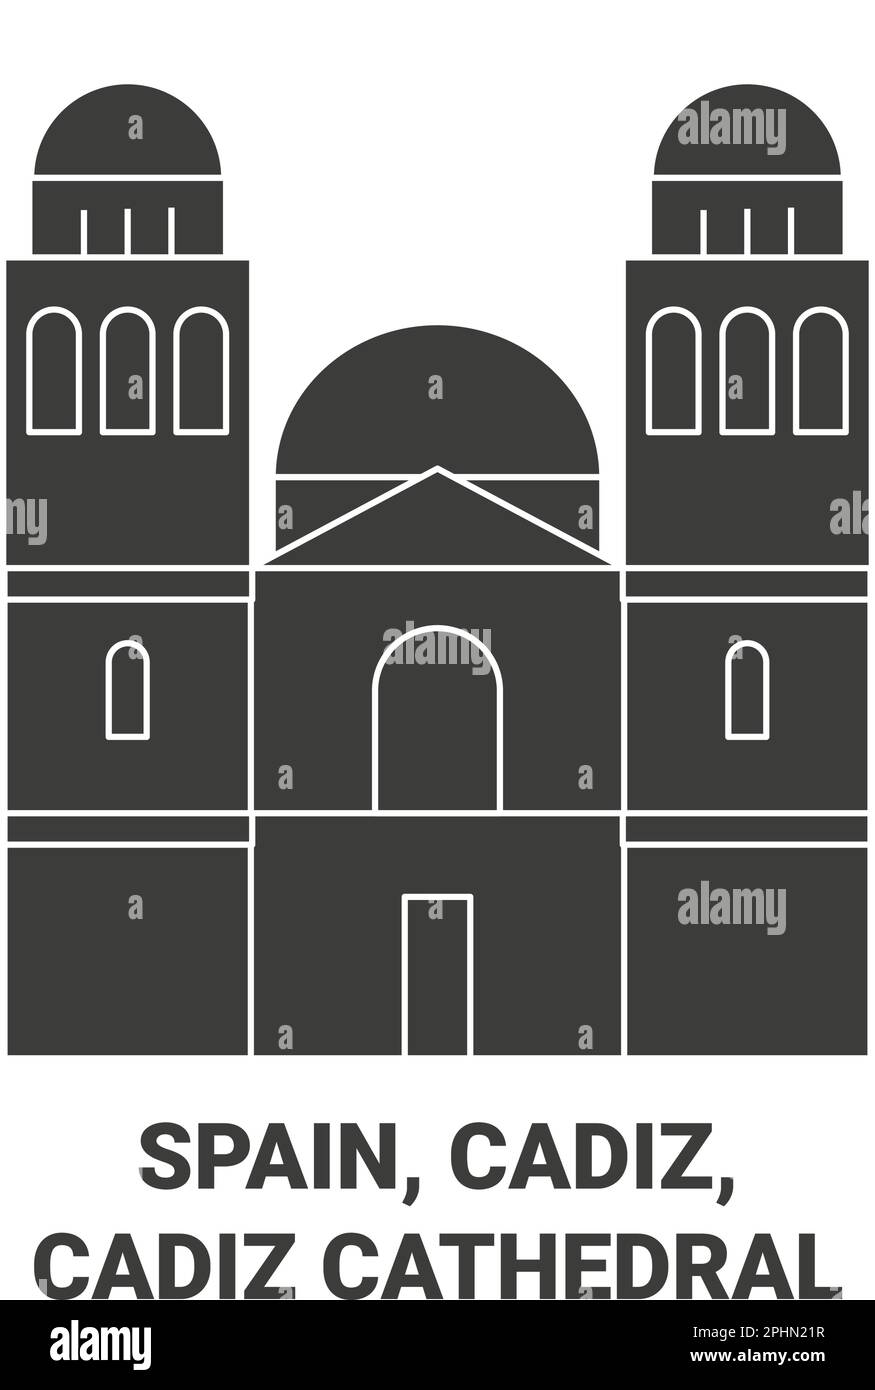 Spain, Cadiz, Cadiz Cathedral travel landmark vector illustration Stock Vector